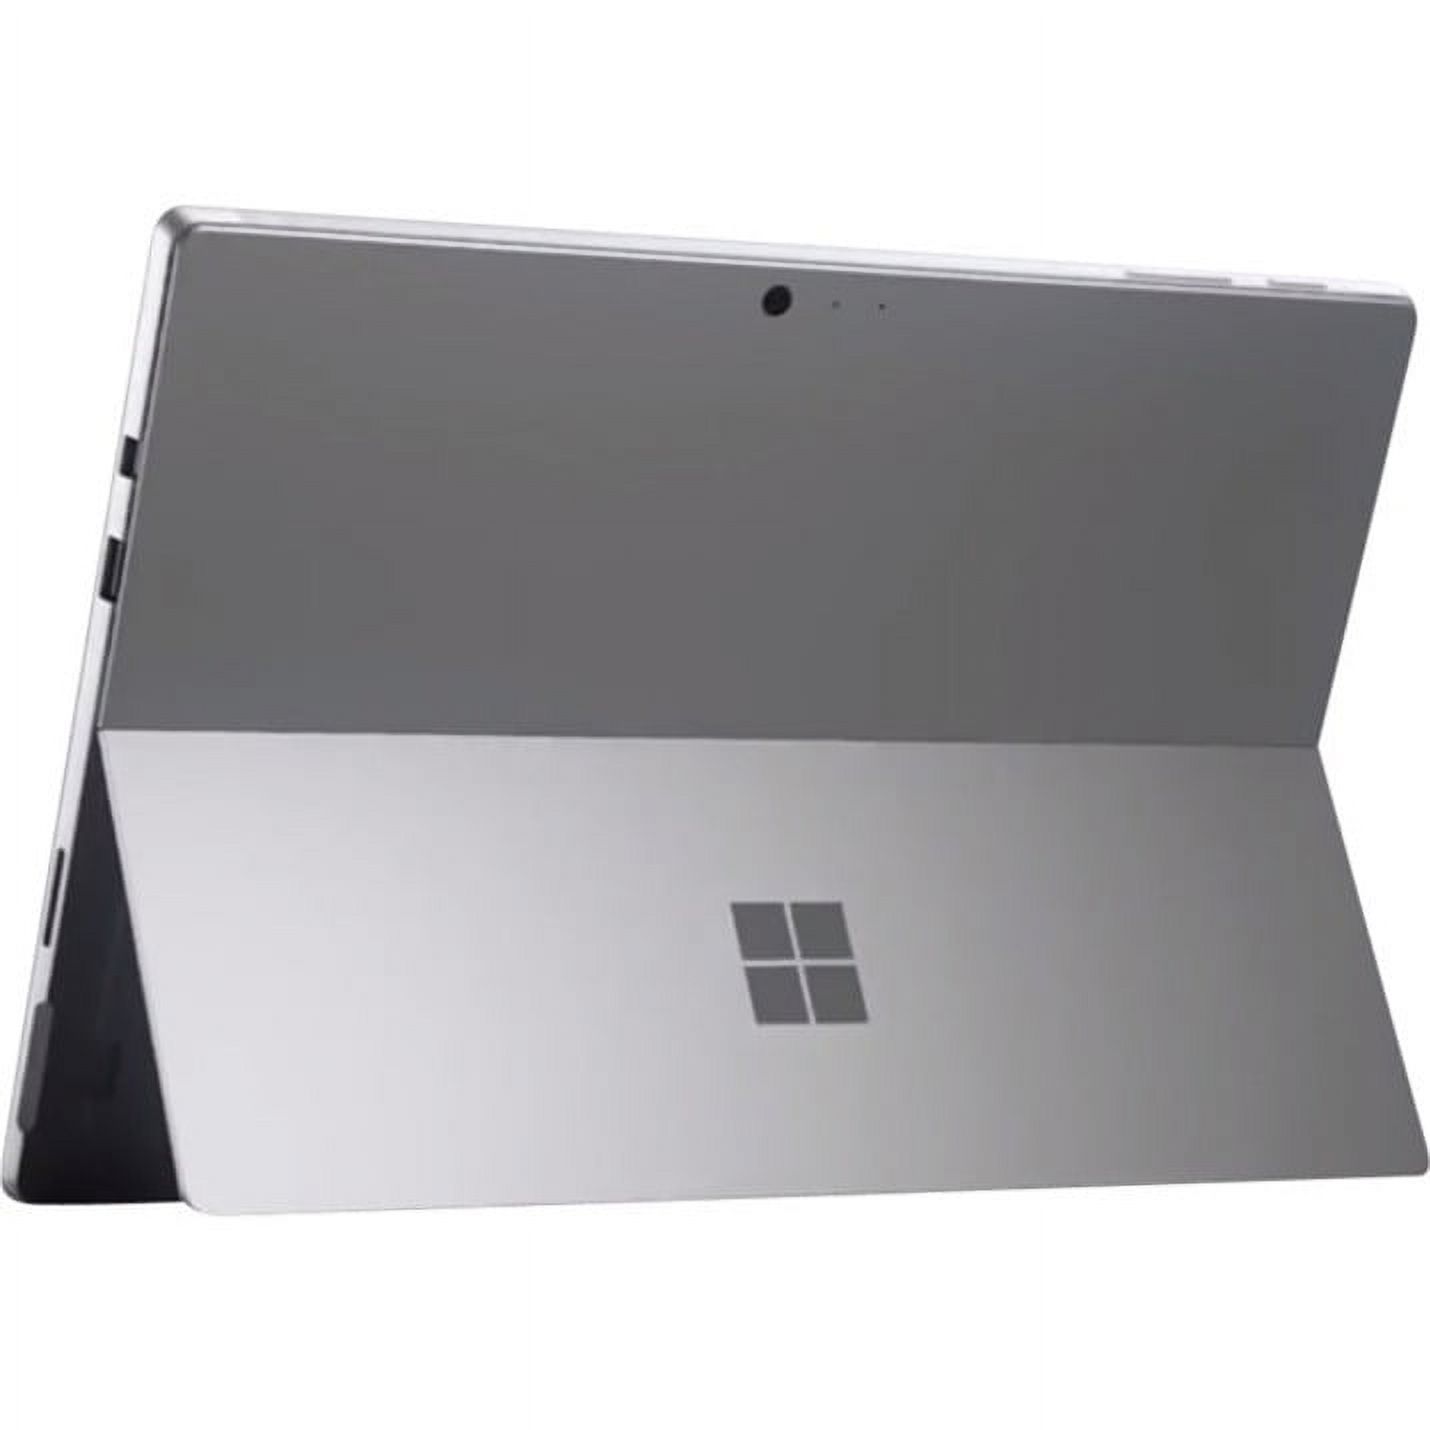 Microsoft Surface Pro 6 - Tablet - Core i5 8250U / 1.6 GHz - Windows 10 Home - 8 GB RAM - 128 GB SSD NVMe - 12.3" Touchscreen 2736 x 1824 - UHD Graphics 620 - Wi-Fi, Bluetooth - Platinum - image 3 of 40